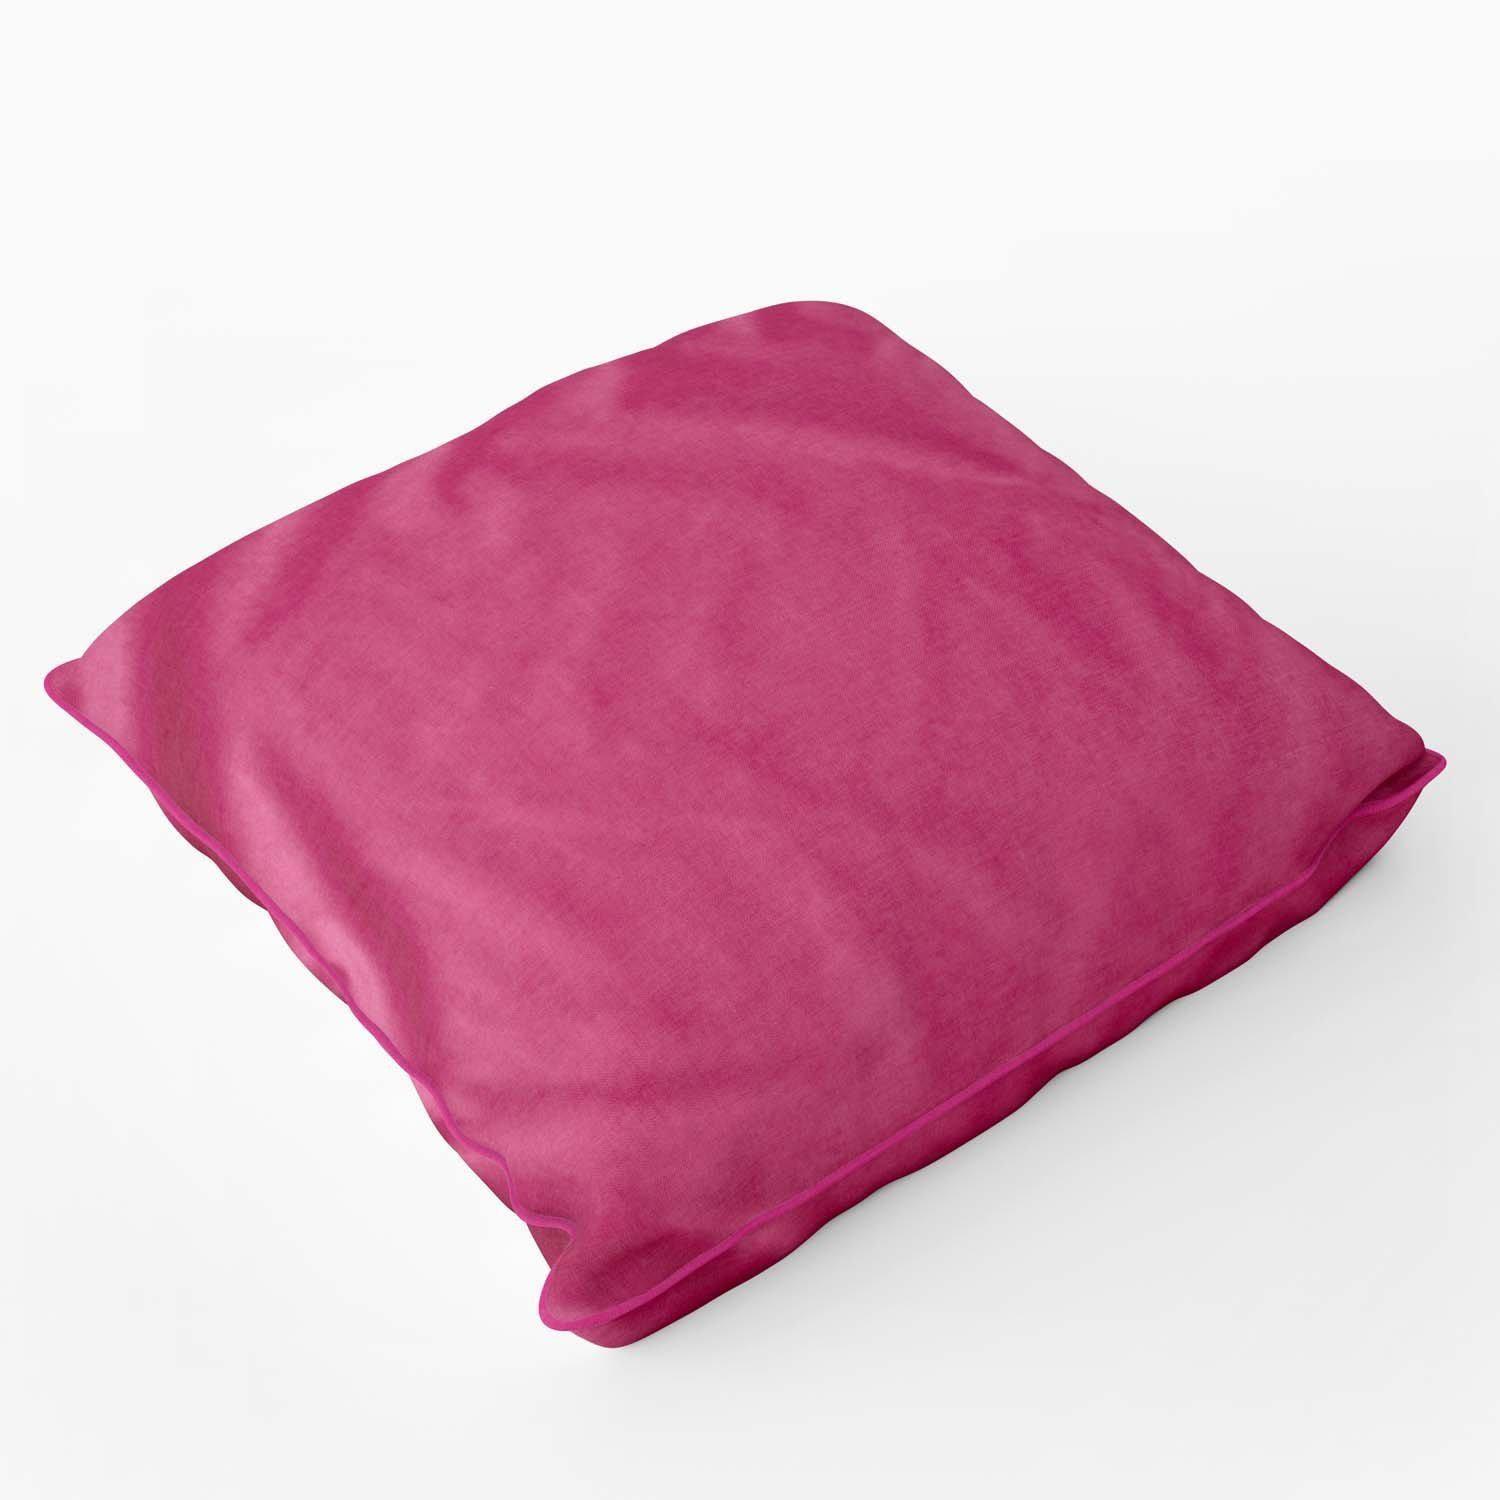 Velvet Velour Cushion Hot Pink Piped - Art Print Cushion - Handmade Cushions UK - WeLoveCushions